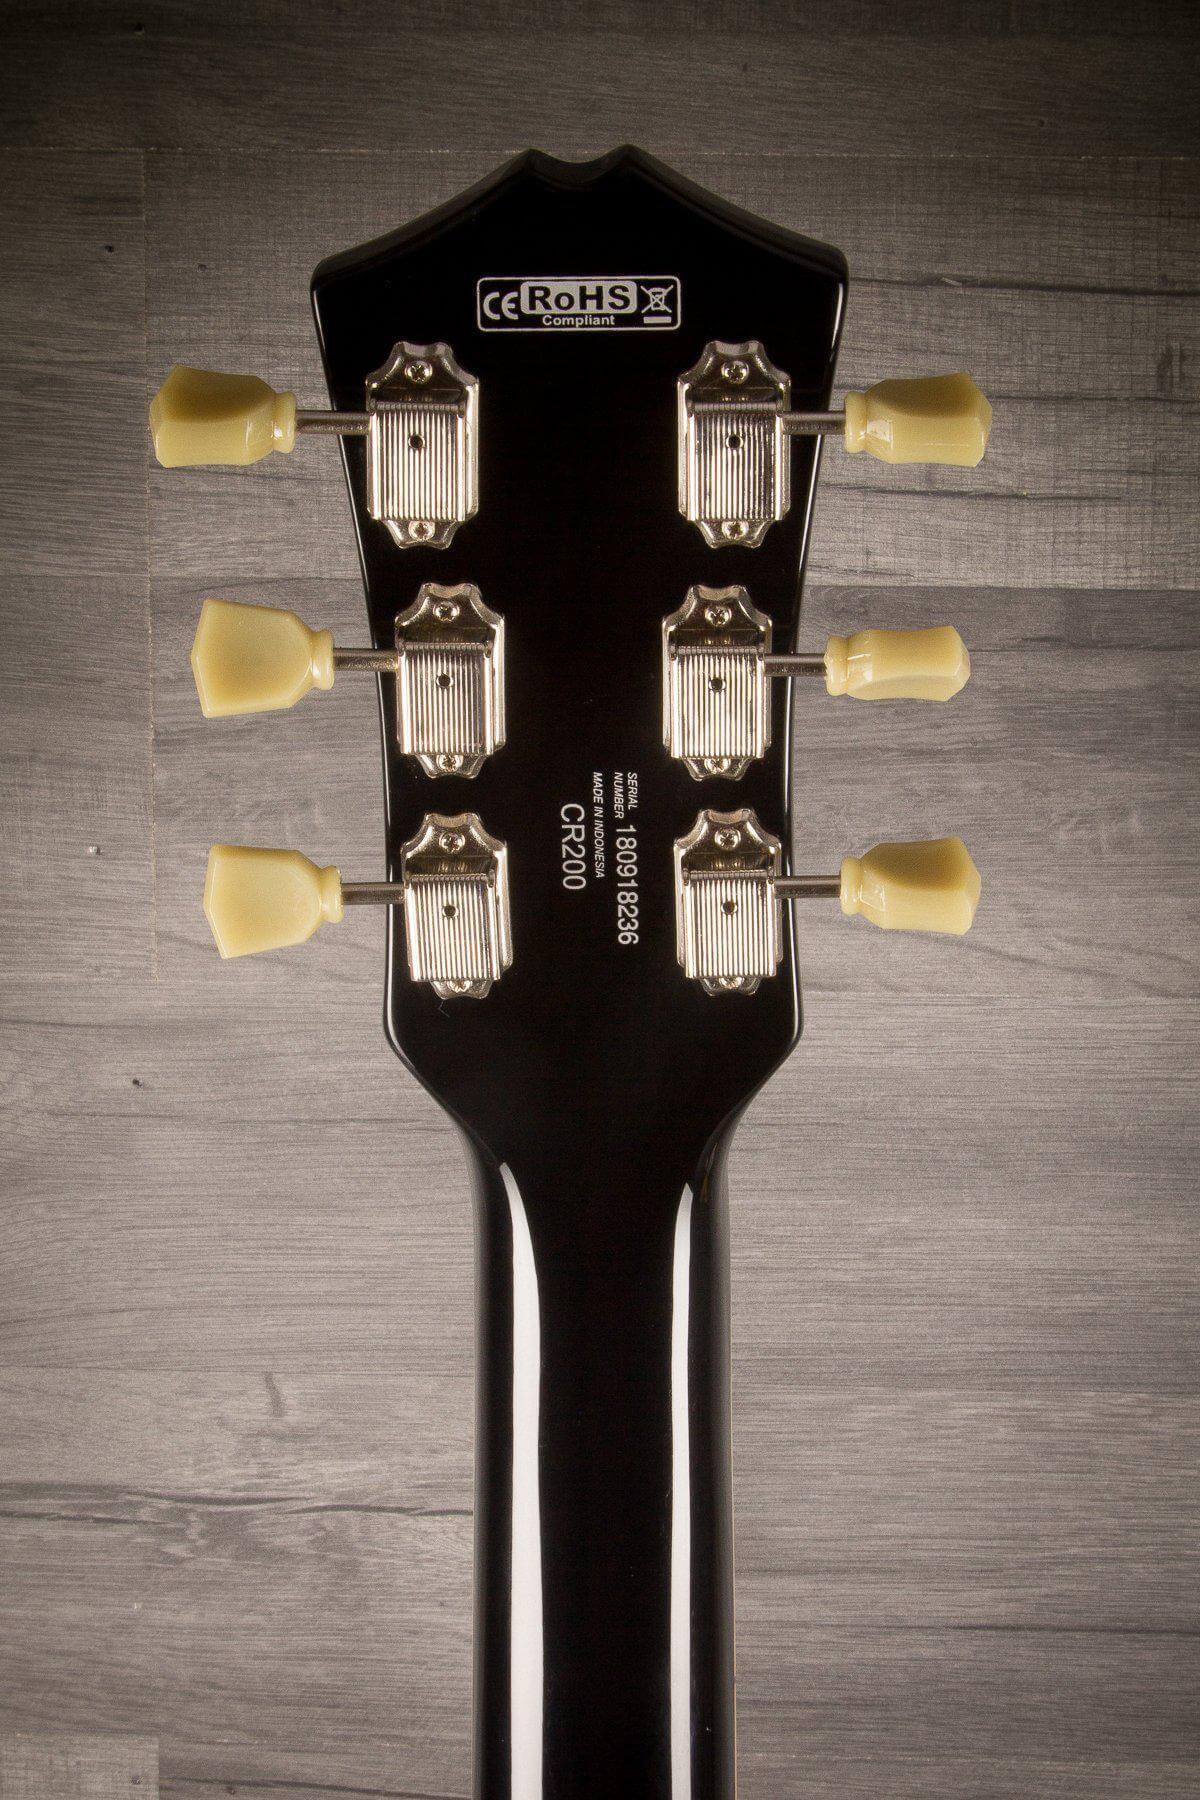 Cort Electric Guitar Cort CR200 Black